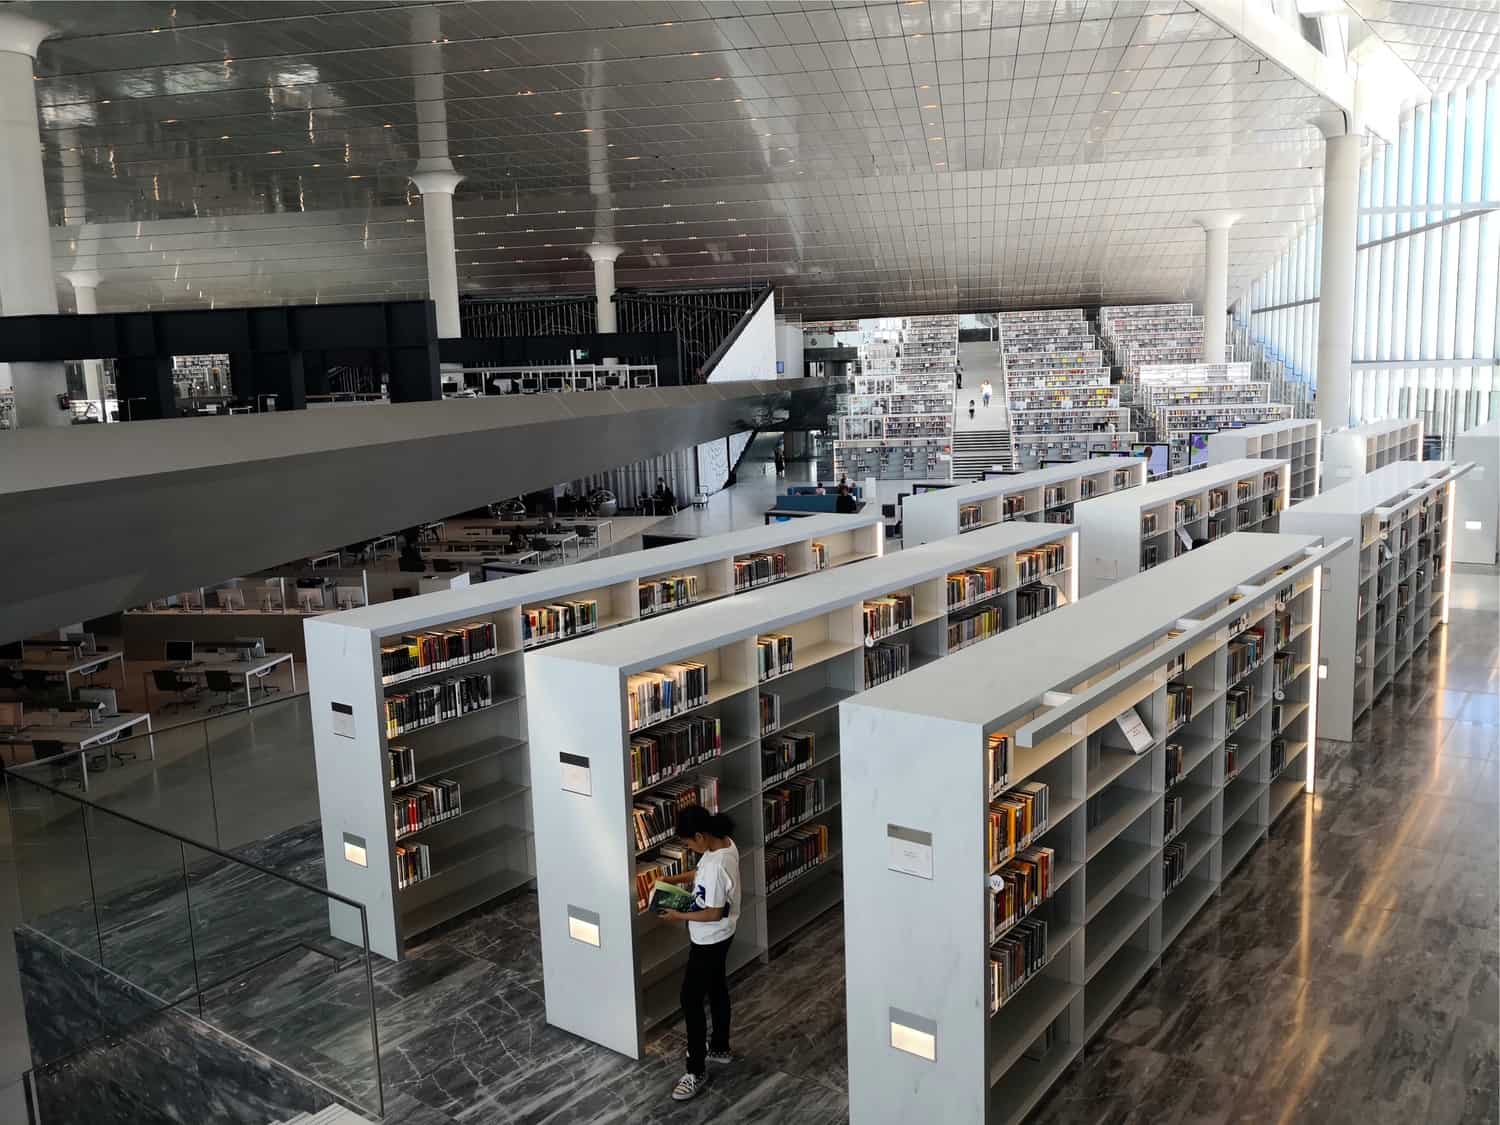 Doha's national library